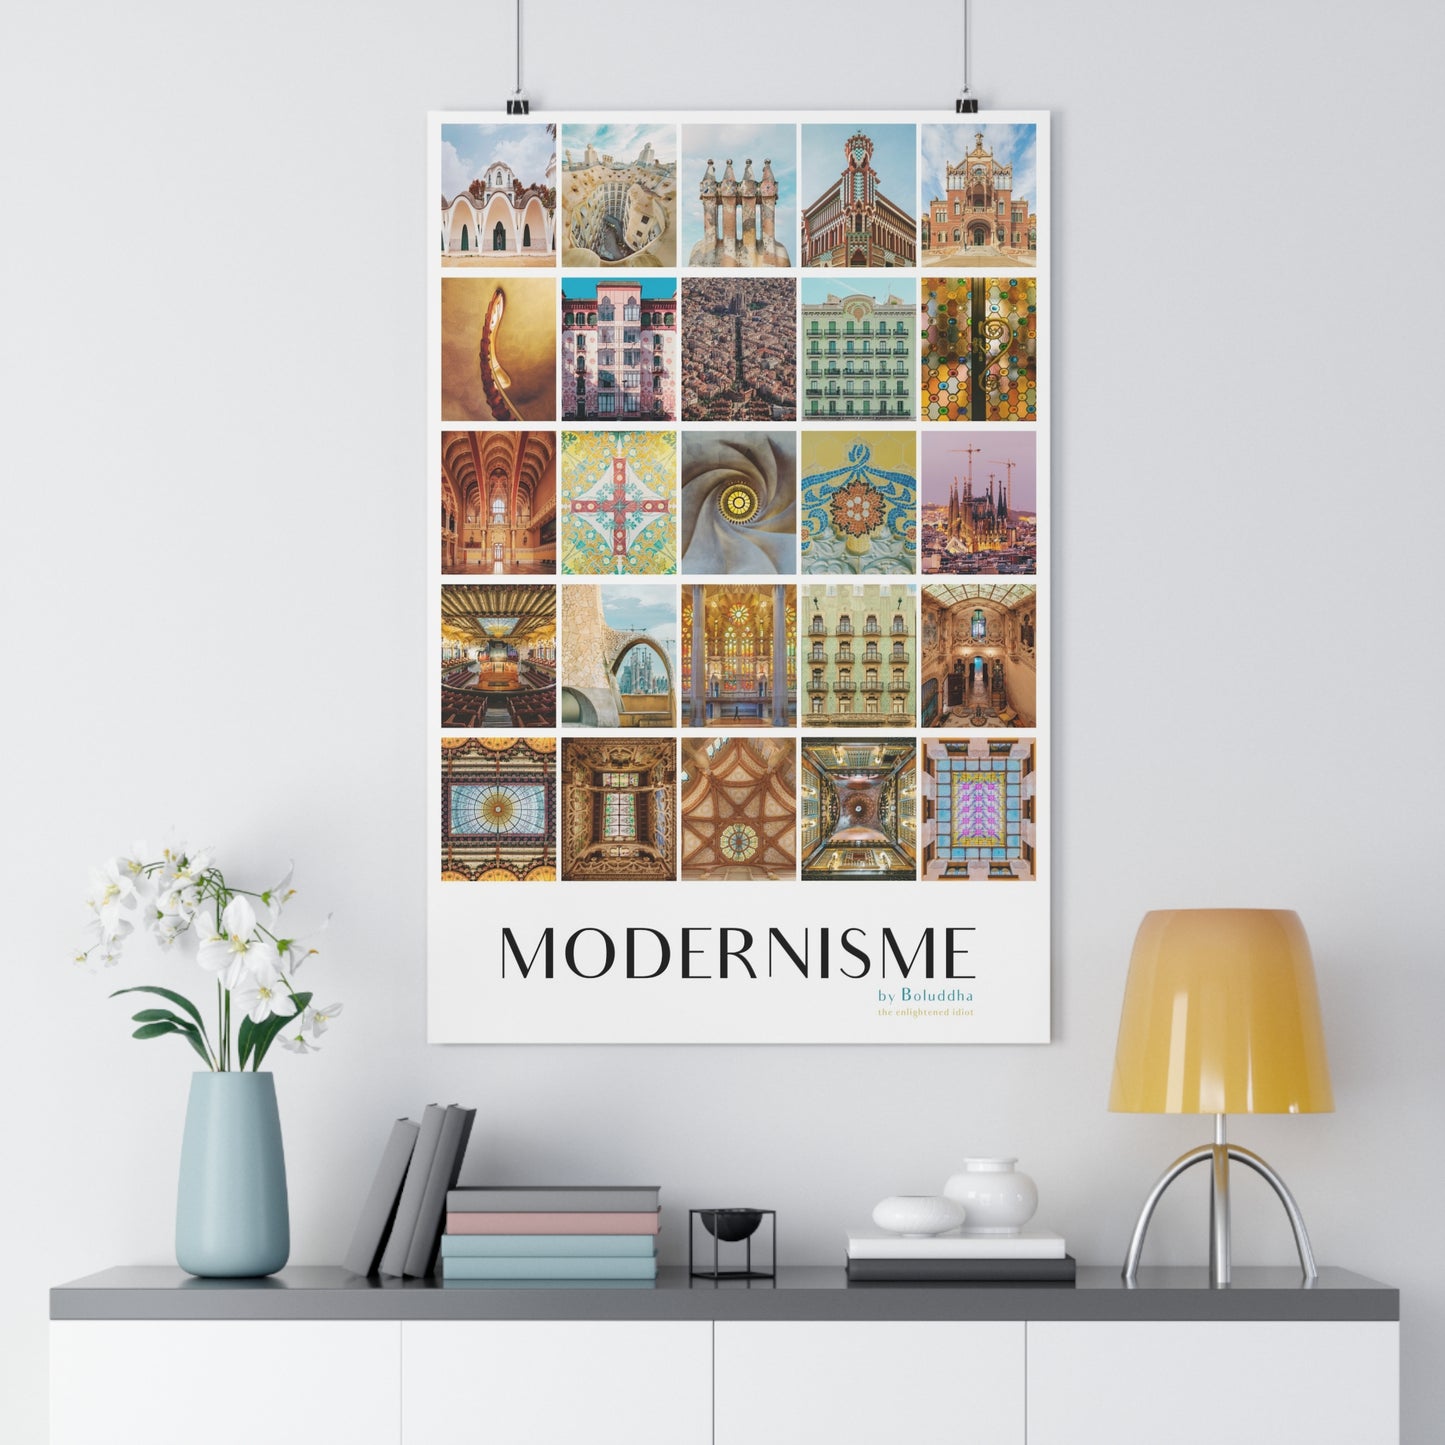 Modernisme by Boluddha